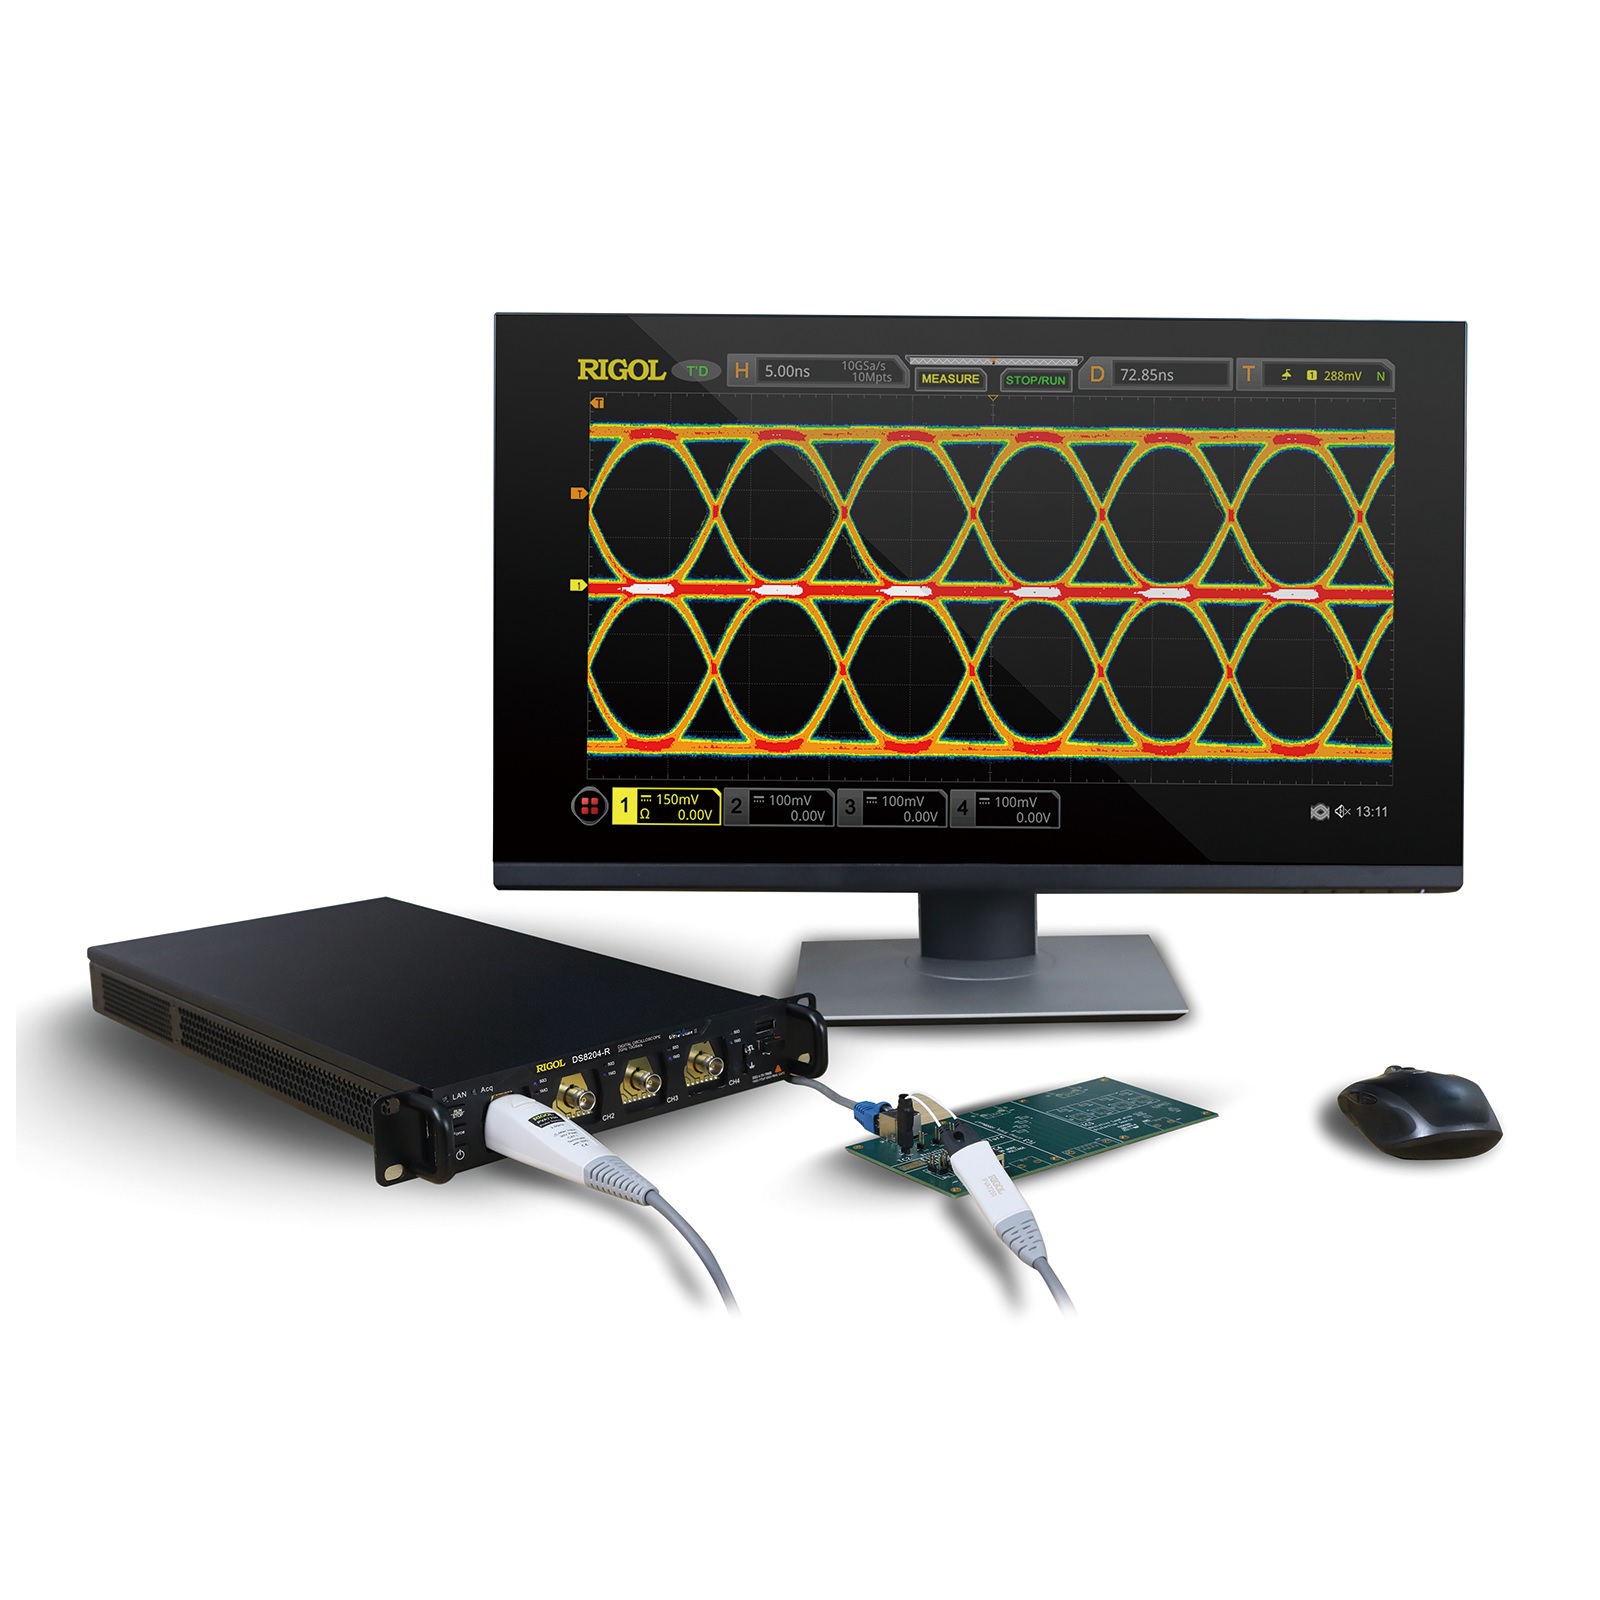 DS8000-R示波器可單機透過滑鼠操控並透過內建HDMI介面輸出至外接螢幕